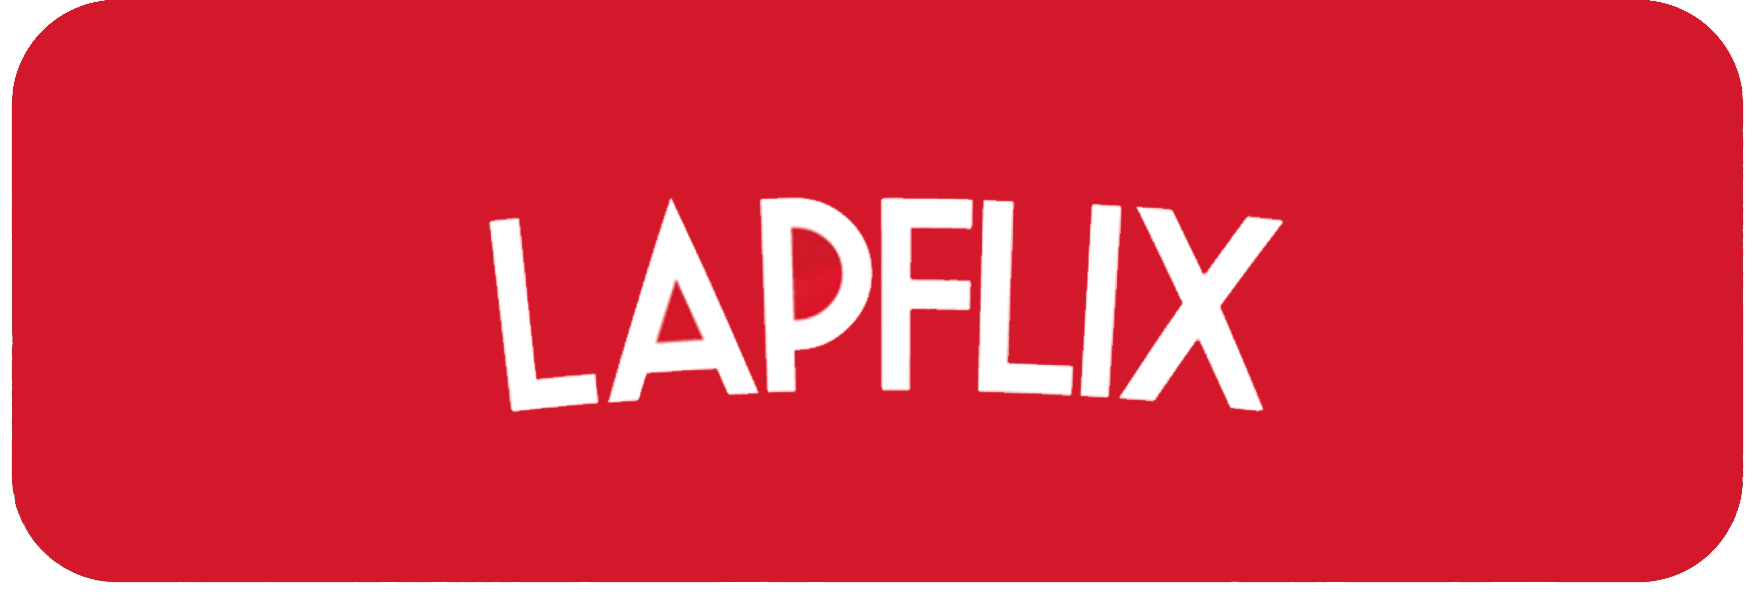 Lapflix